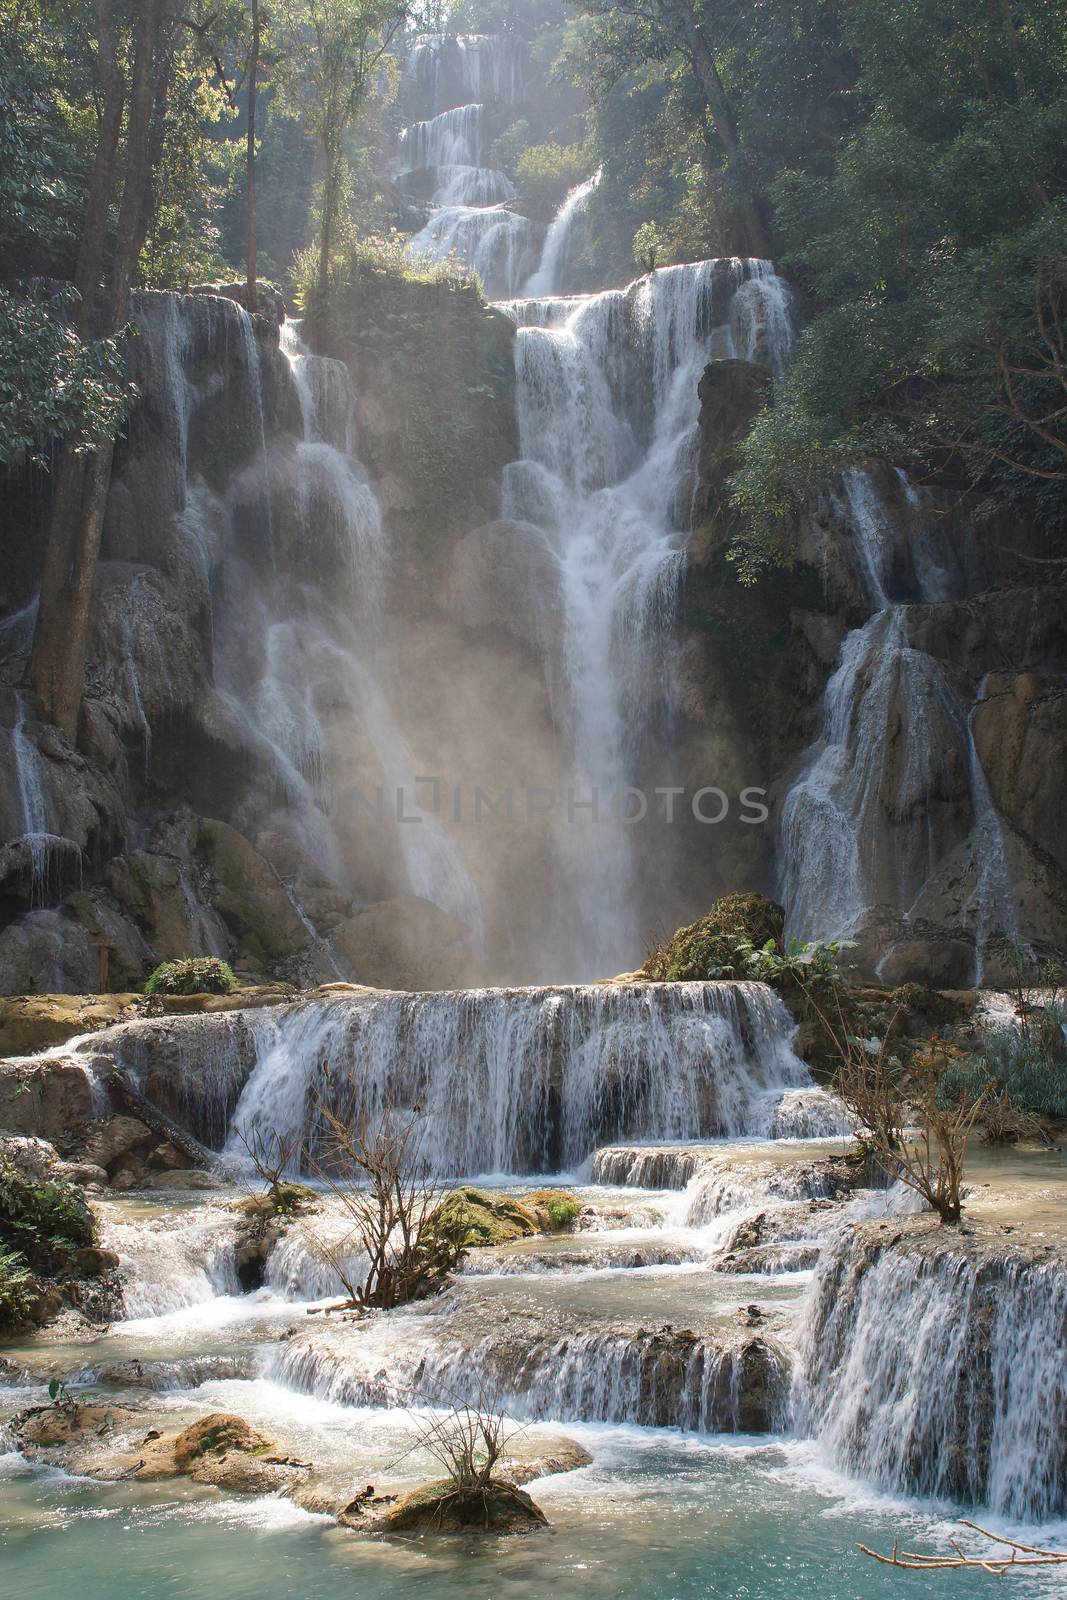 Tat Kuang Si Waterfall, Laos by alfotokunst